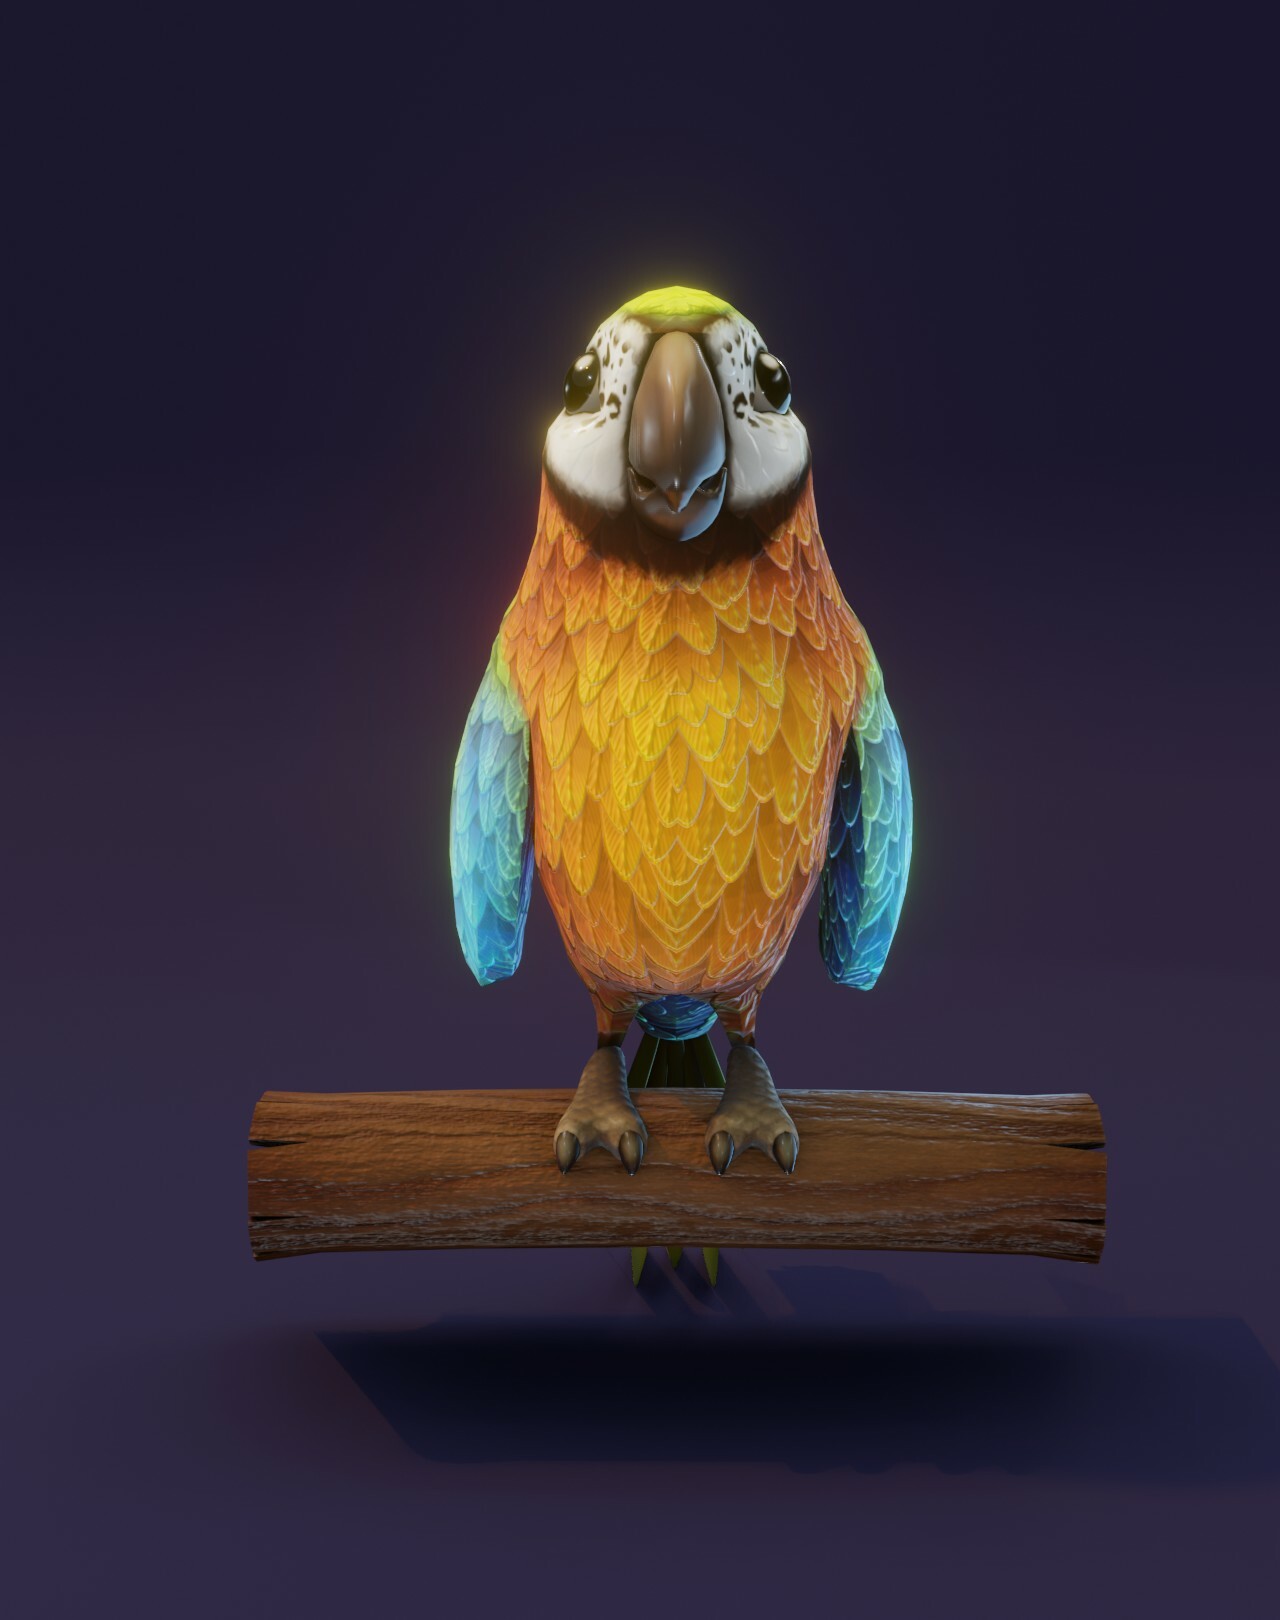 ArtStation - Cartoon Ara Parrot Blue-Yellow-Green Rigged 3D Model ...